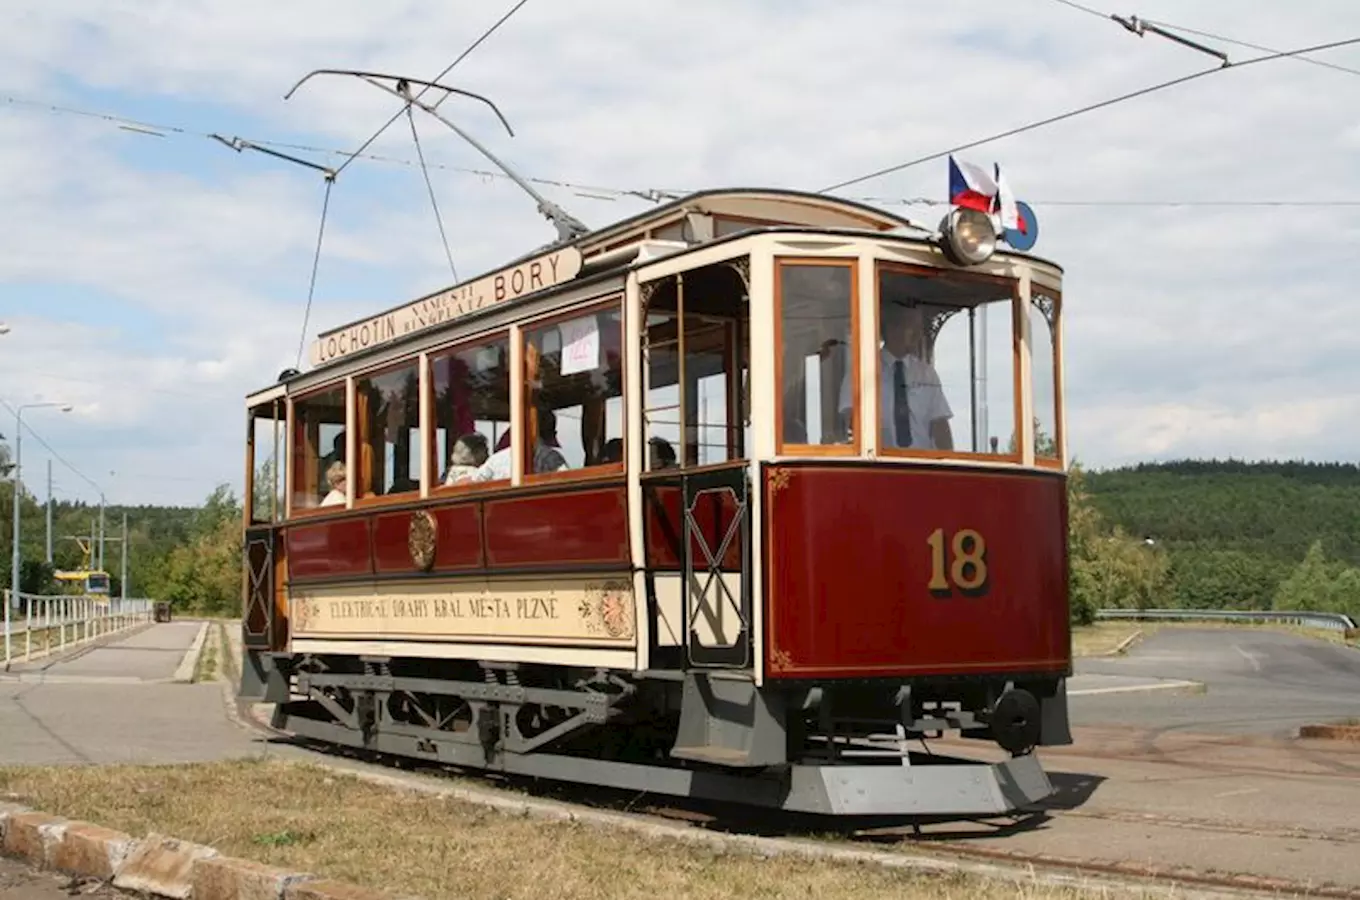 Tramvaj "primátorský vůz" v Plzni – nejstarší provozuschopná tramvaj